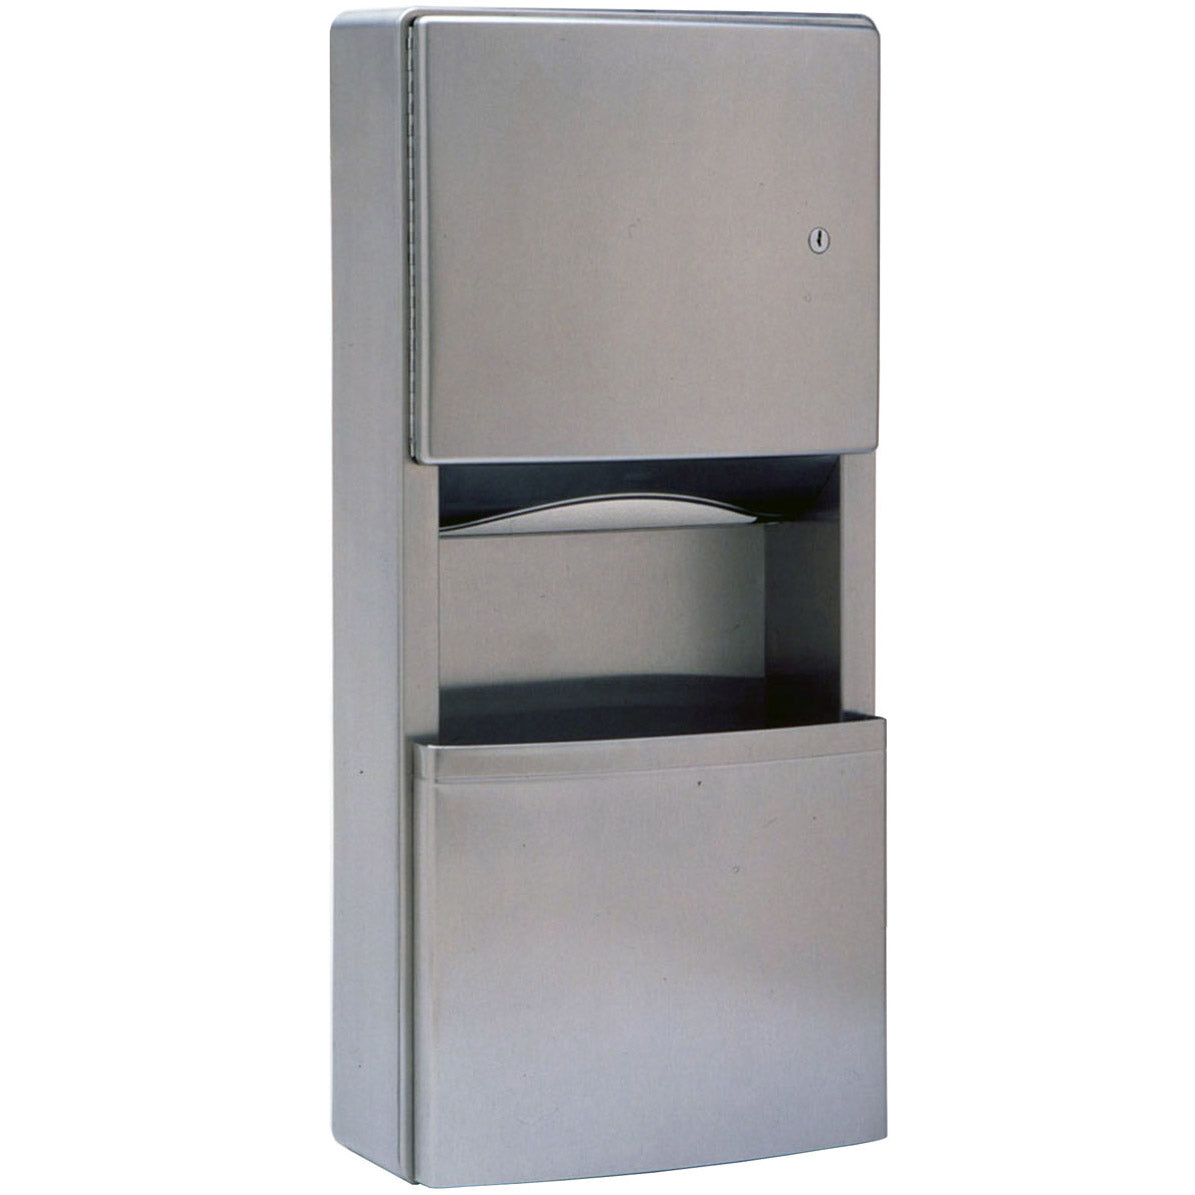 Bobrick B-43699 Surface-Mounted Paper Towel Dispenser/Waste Receptacle